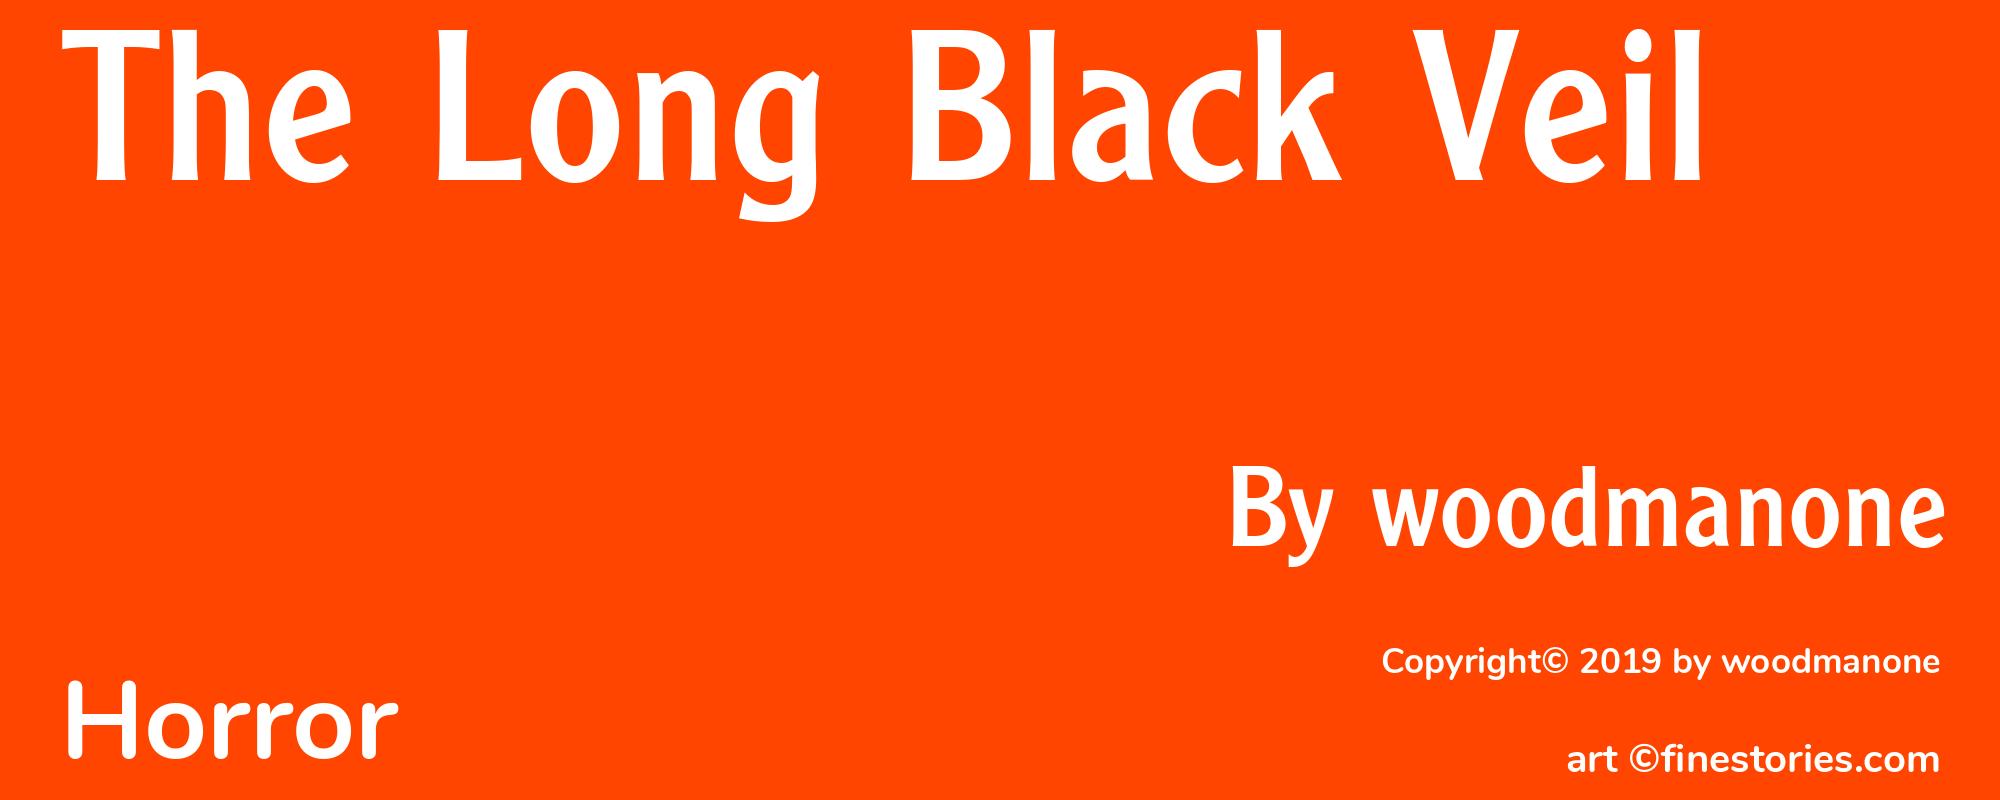 The Long Black Veil - Cover